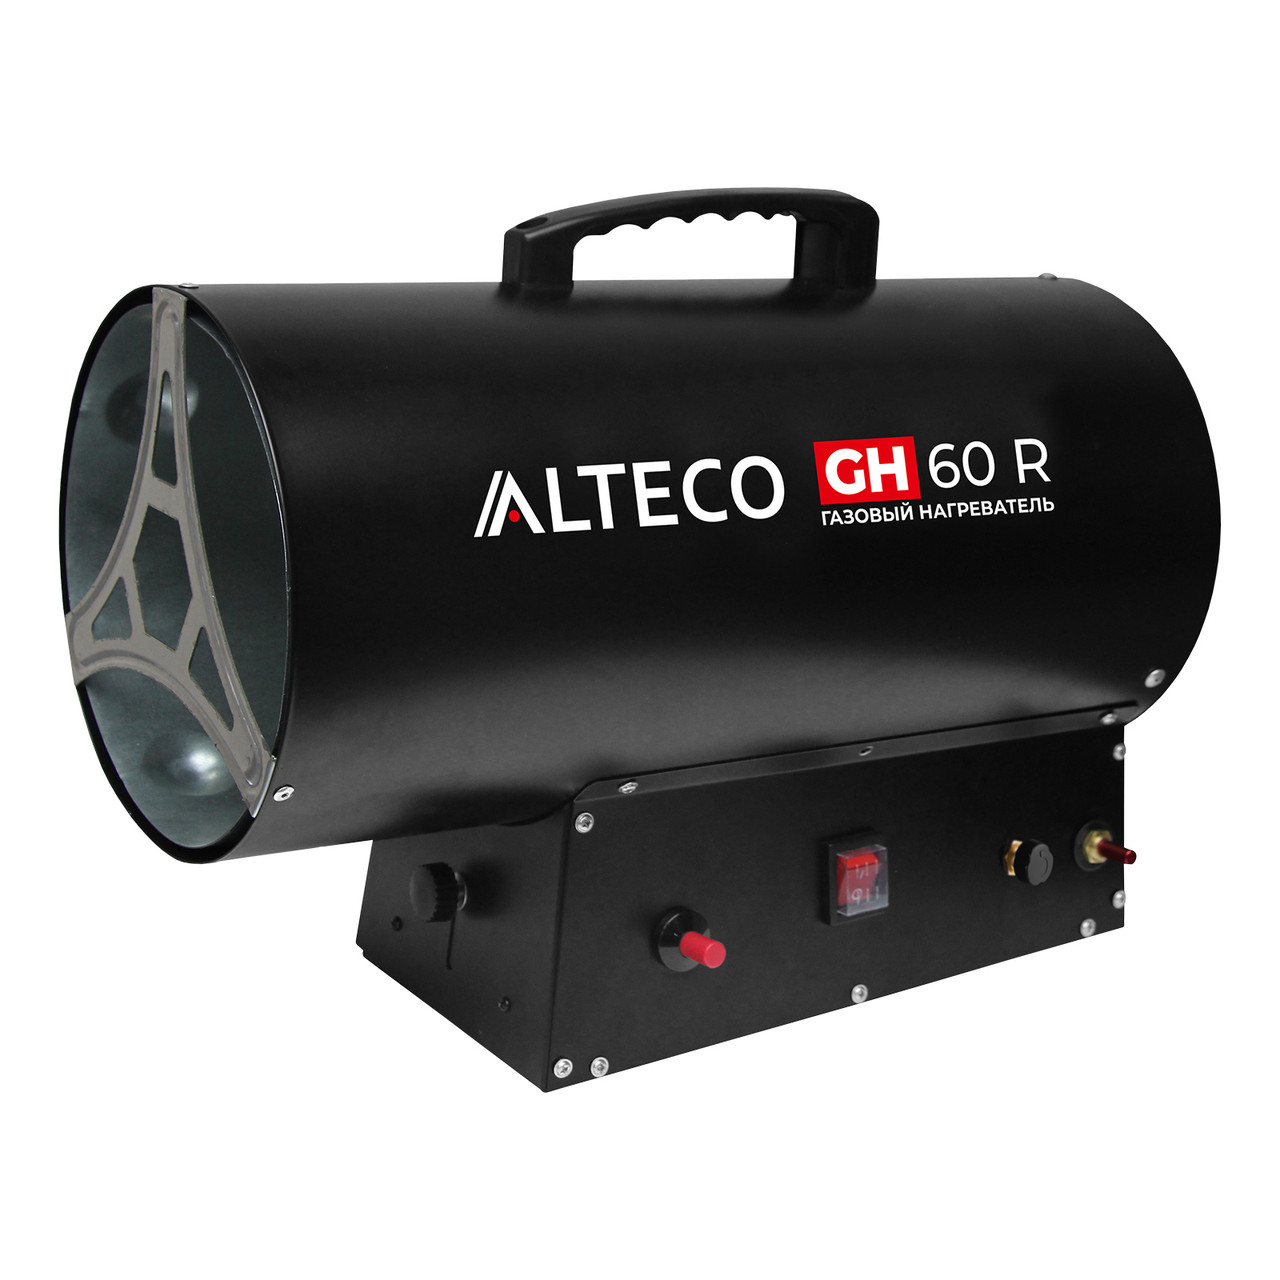 Газовый нагреватель ALTECO GH 60 R (N)